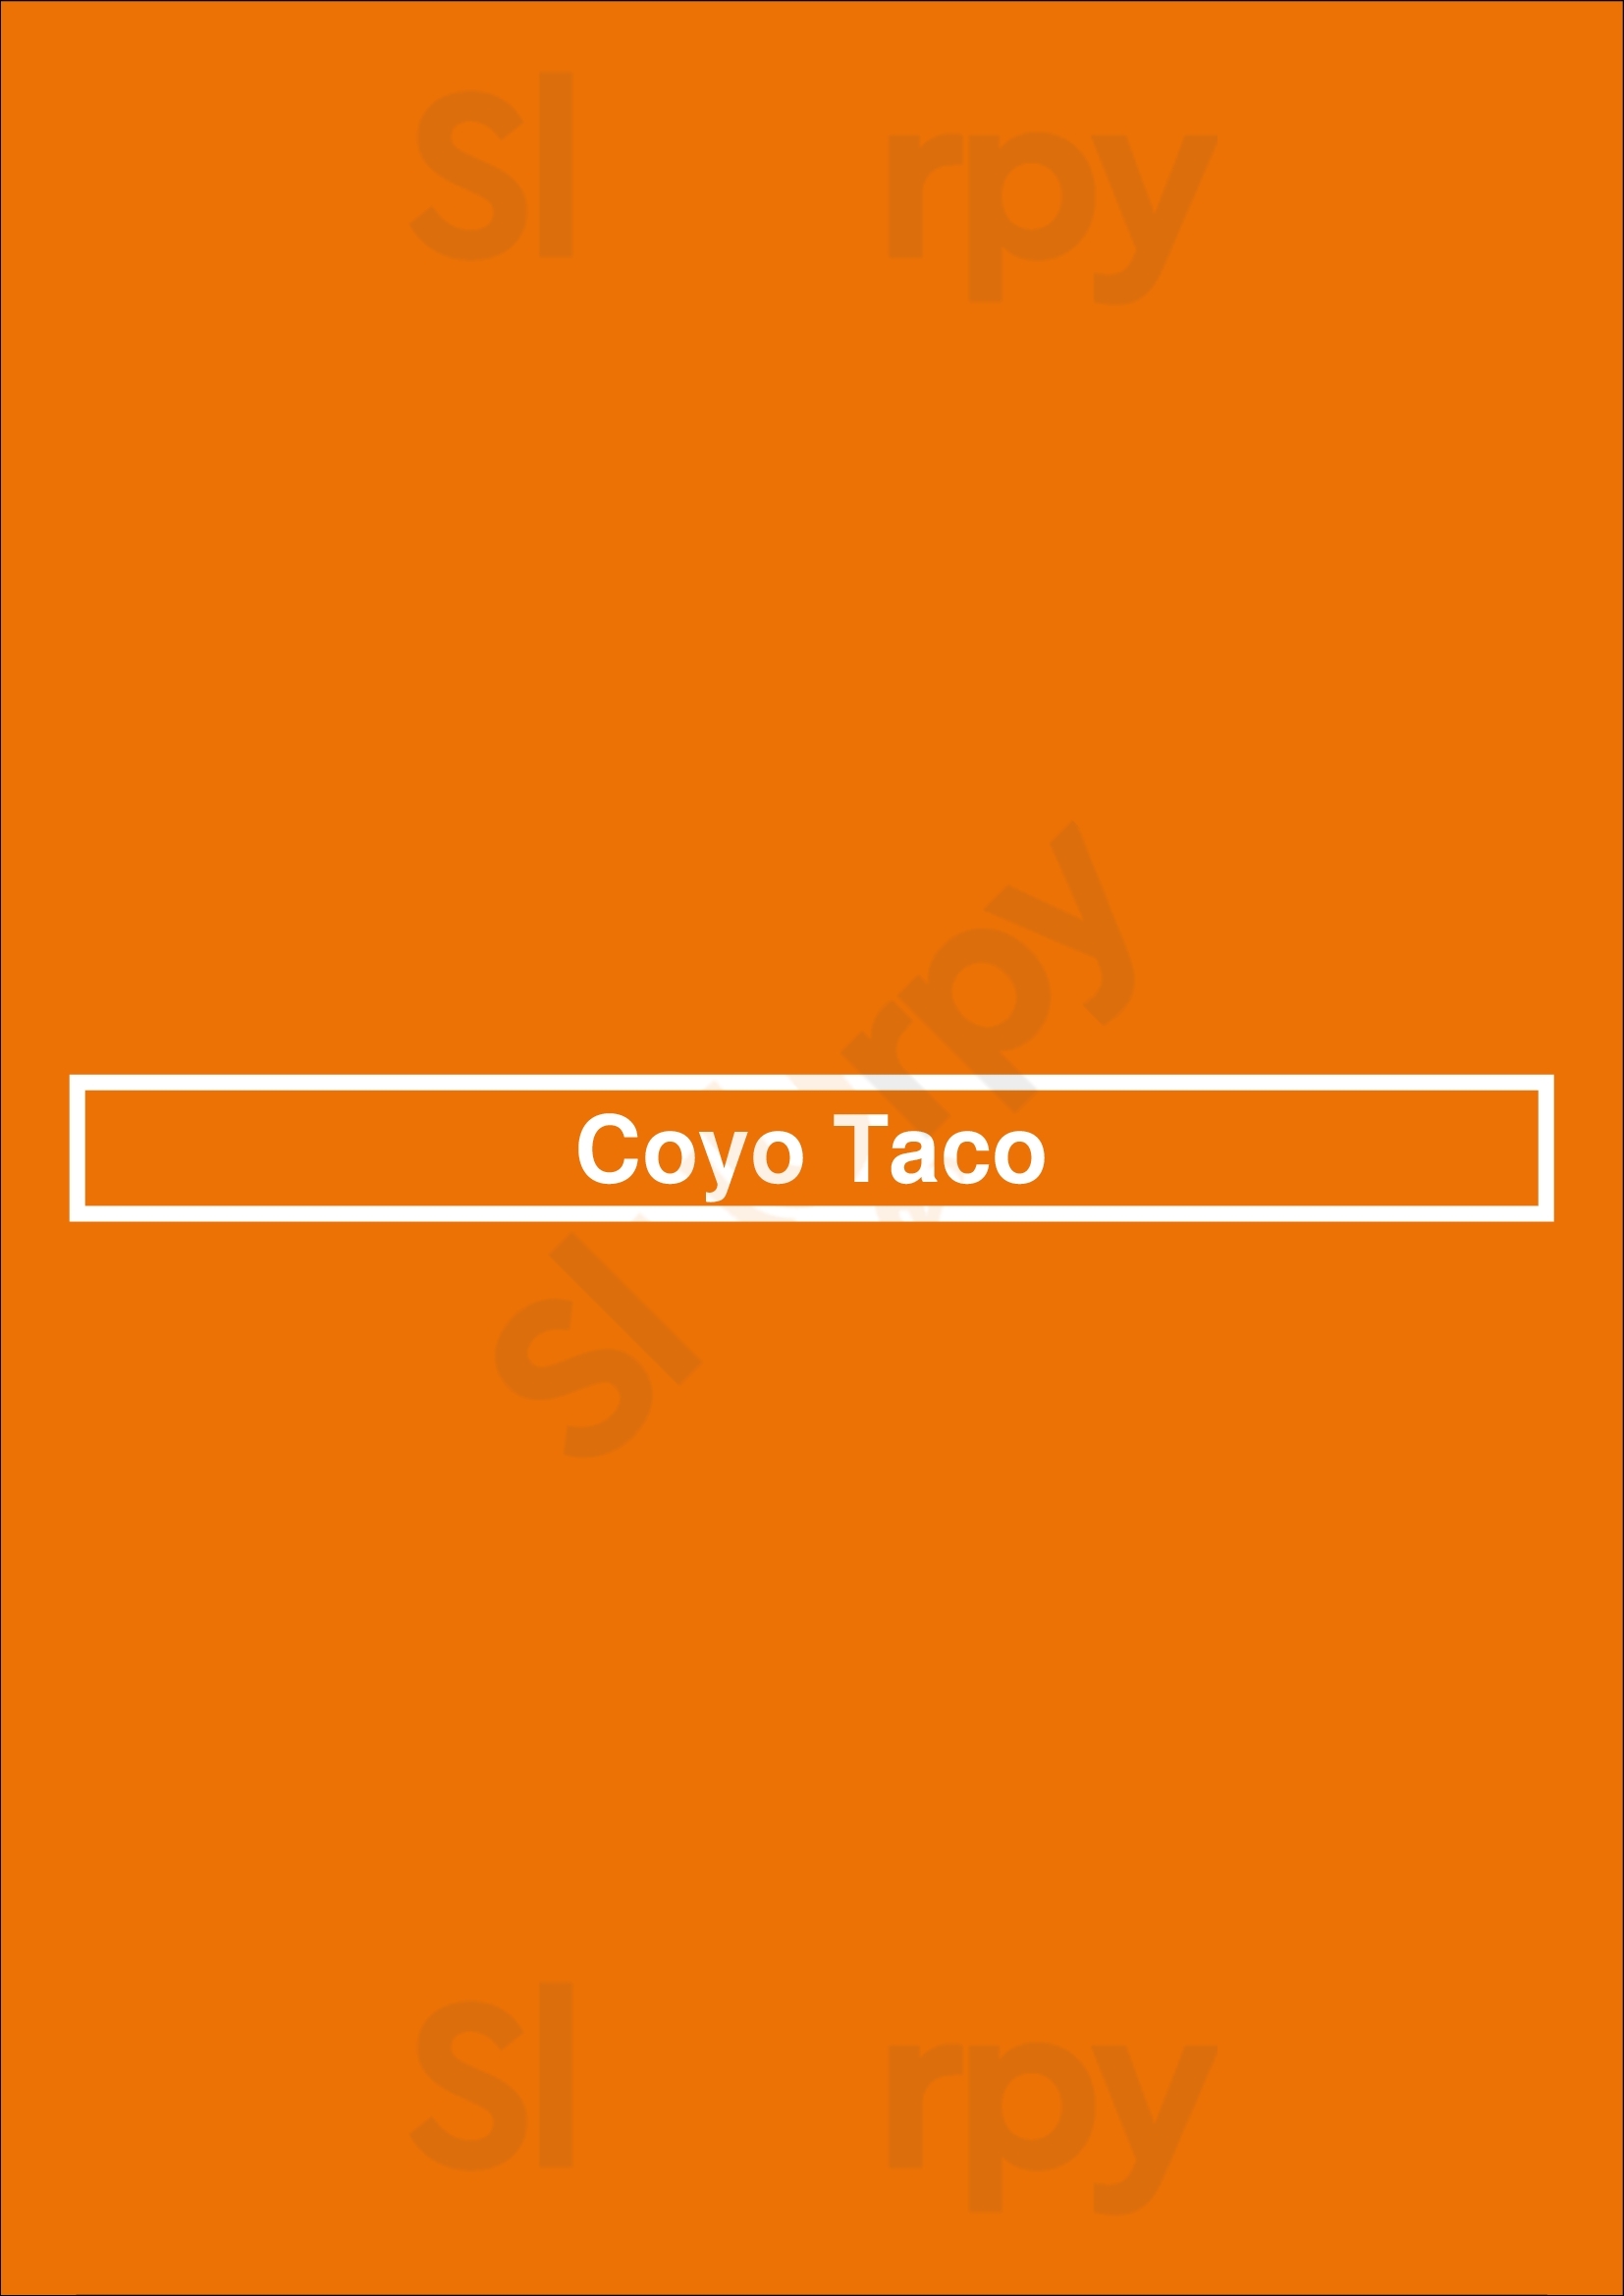 Coyo Taco Miami Menu - 1